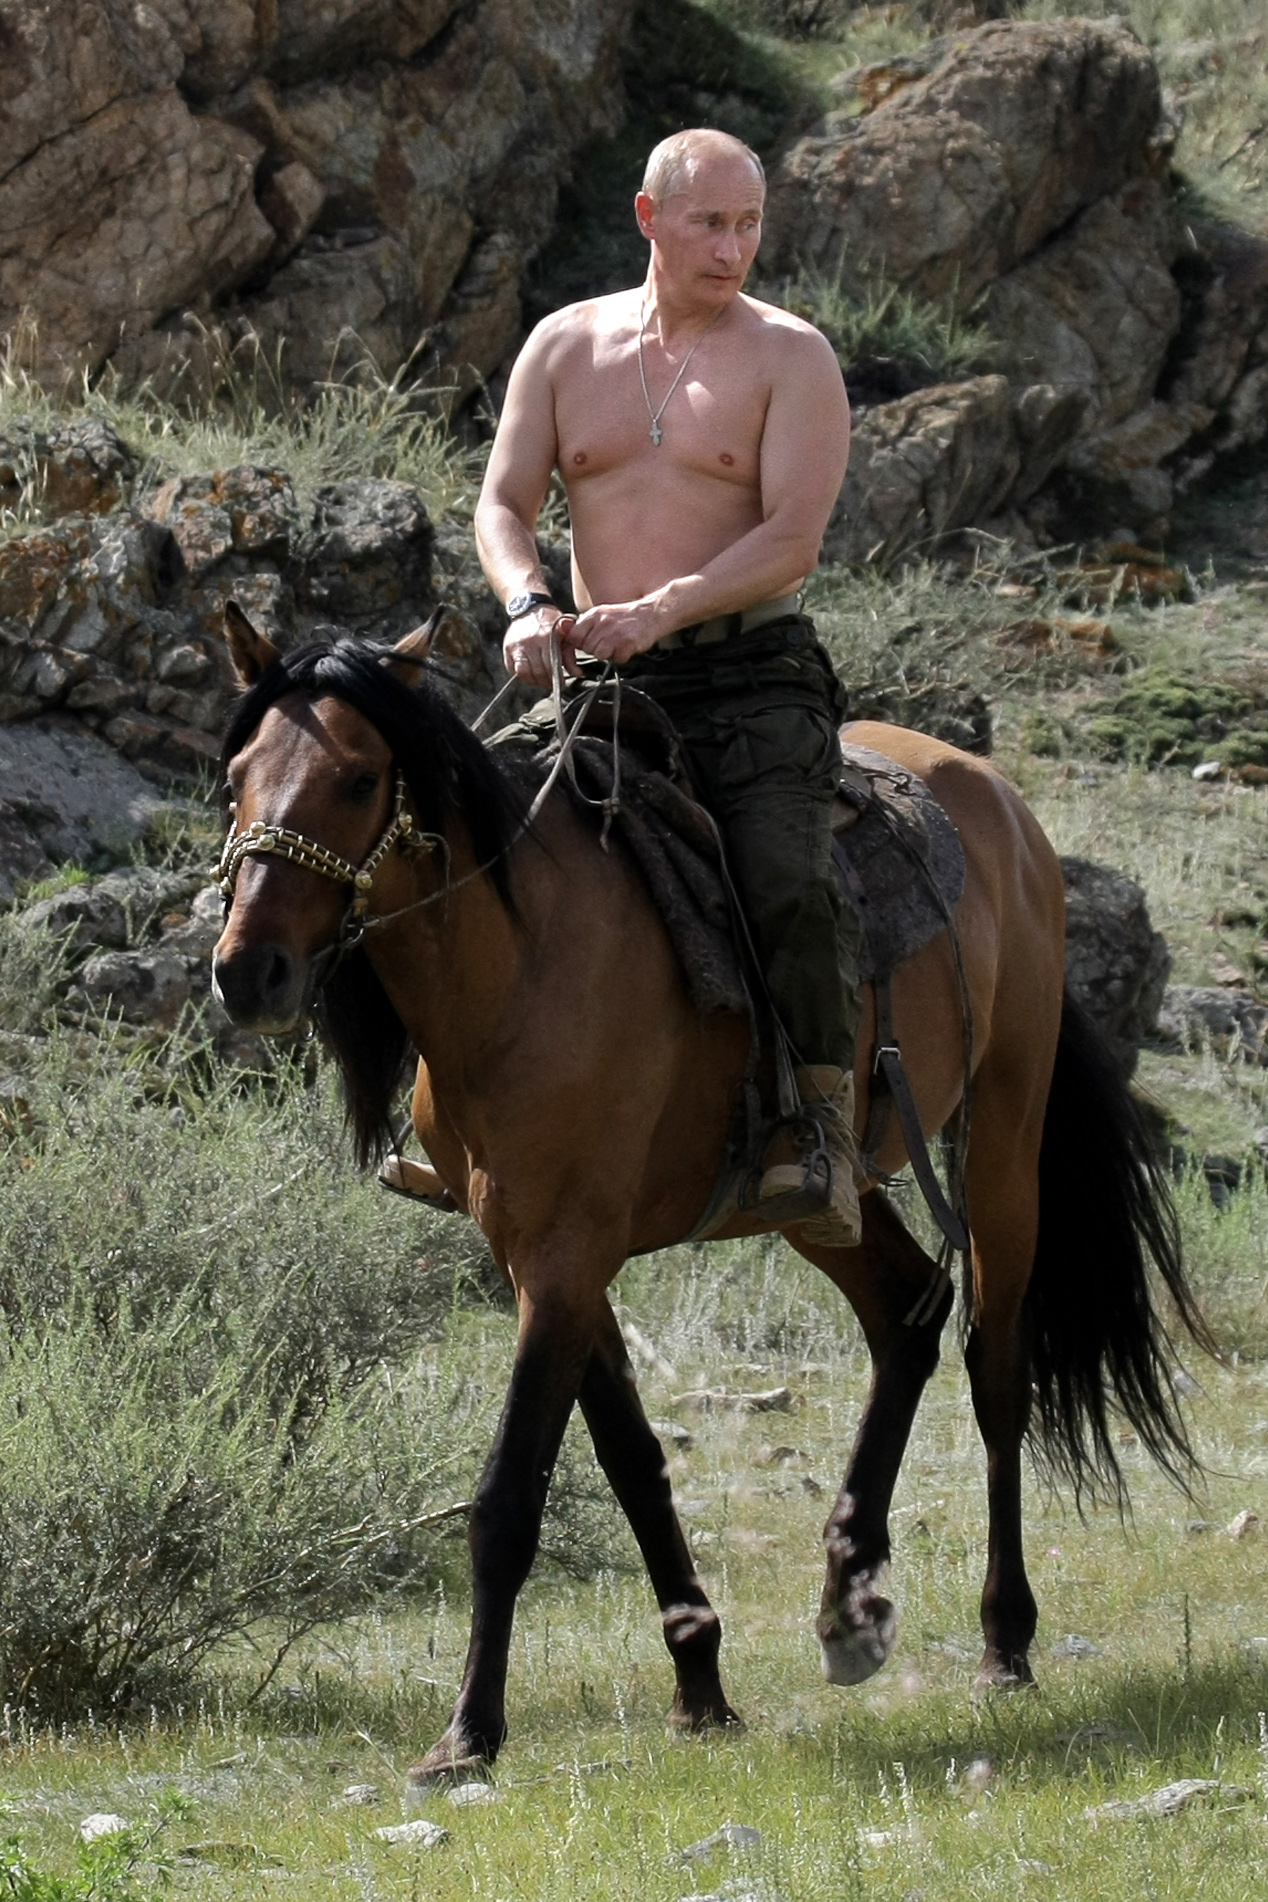 Putin has been cracking down on nudity and debauchery despite going topless himself